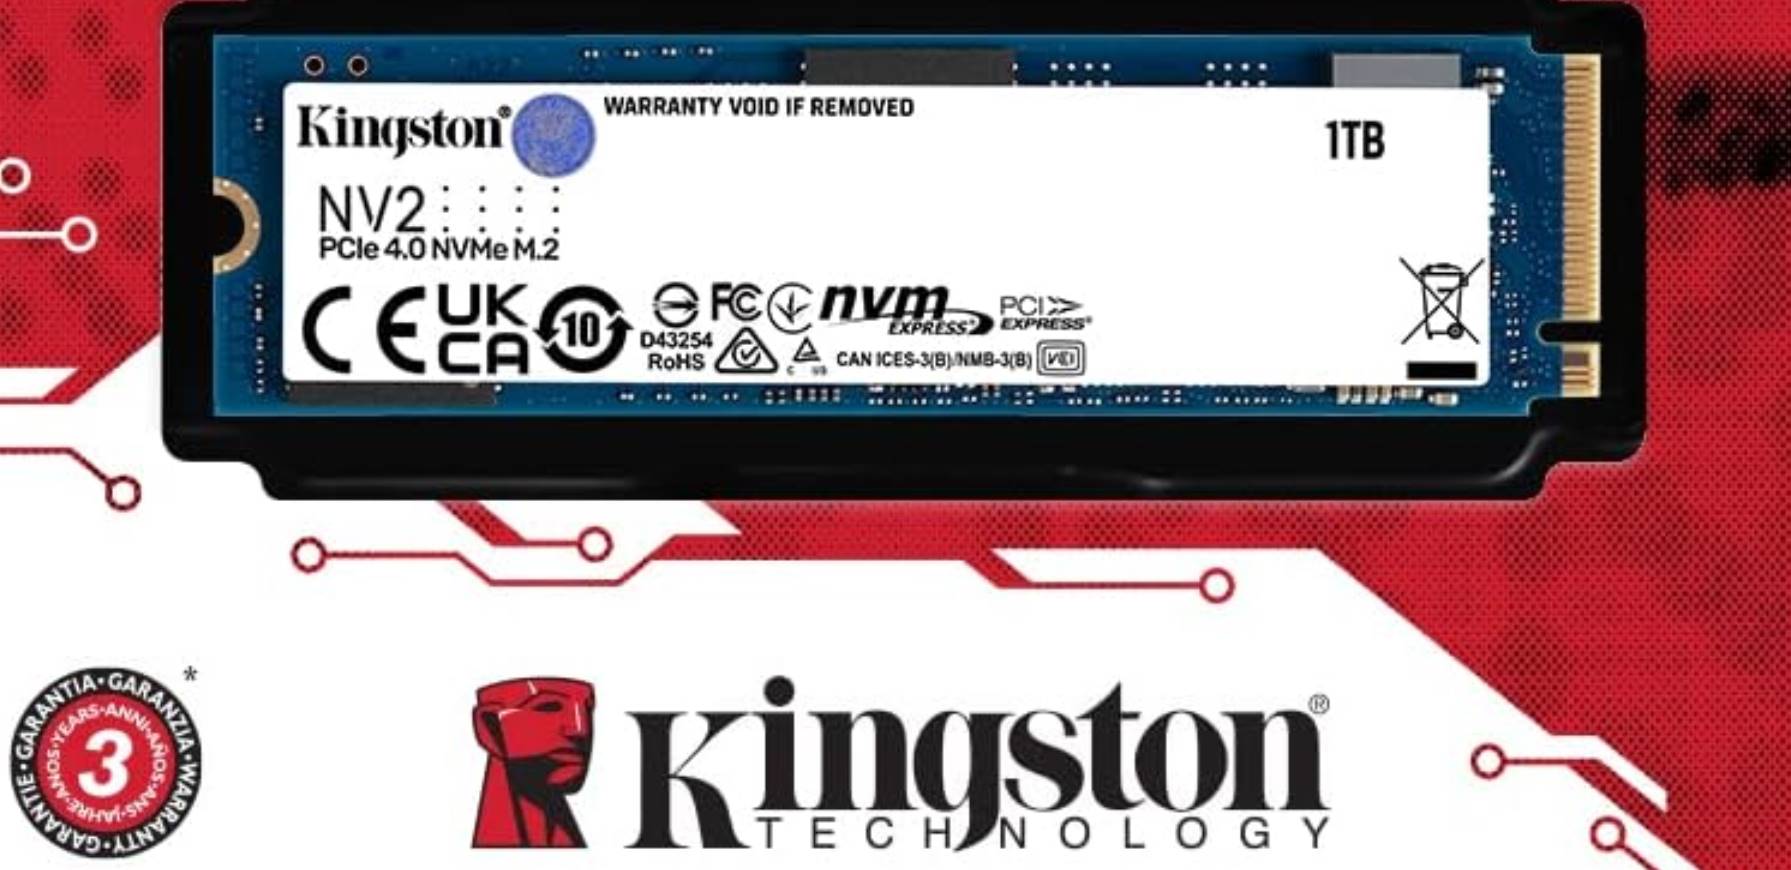 Kingston NV2 NVMe SSD 1TB Recensione